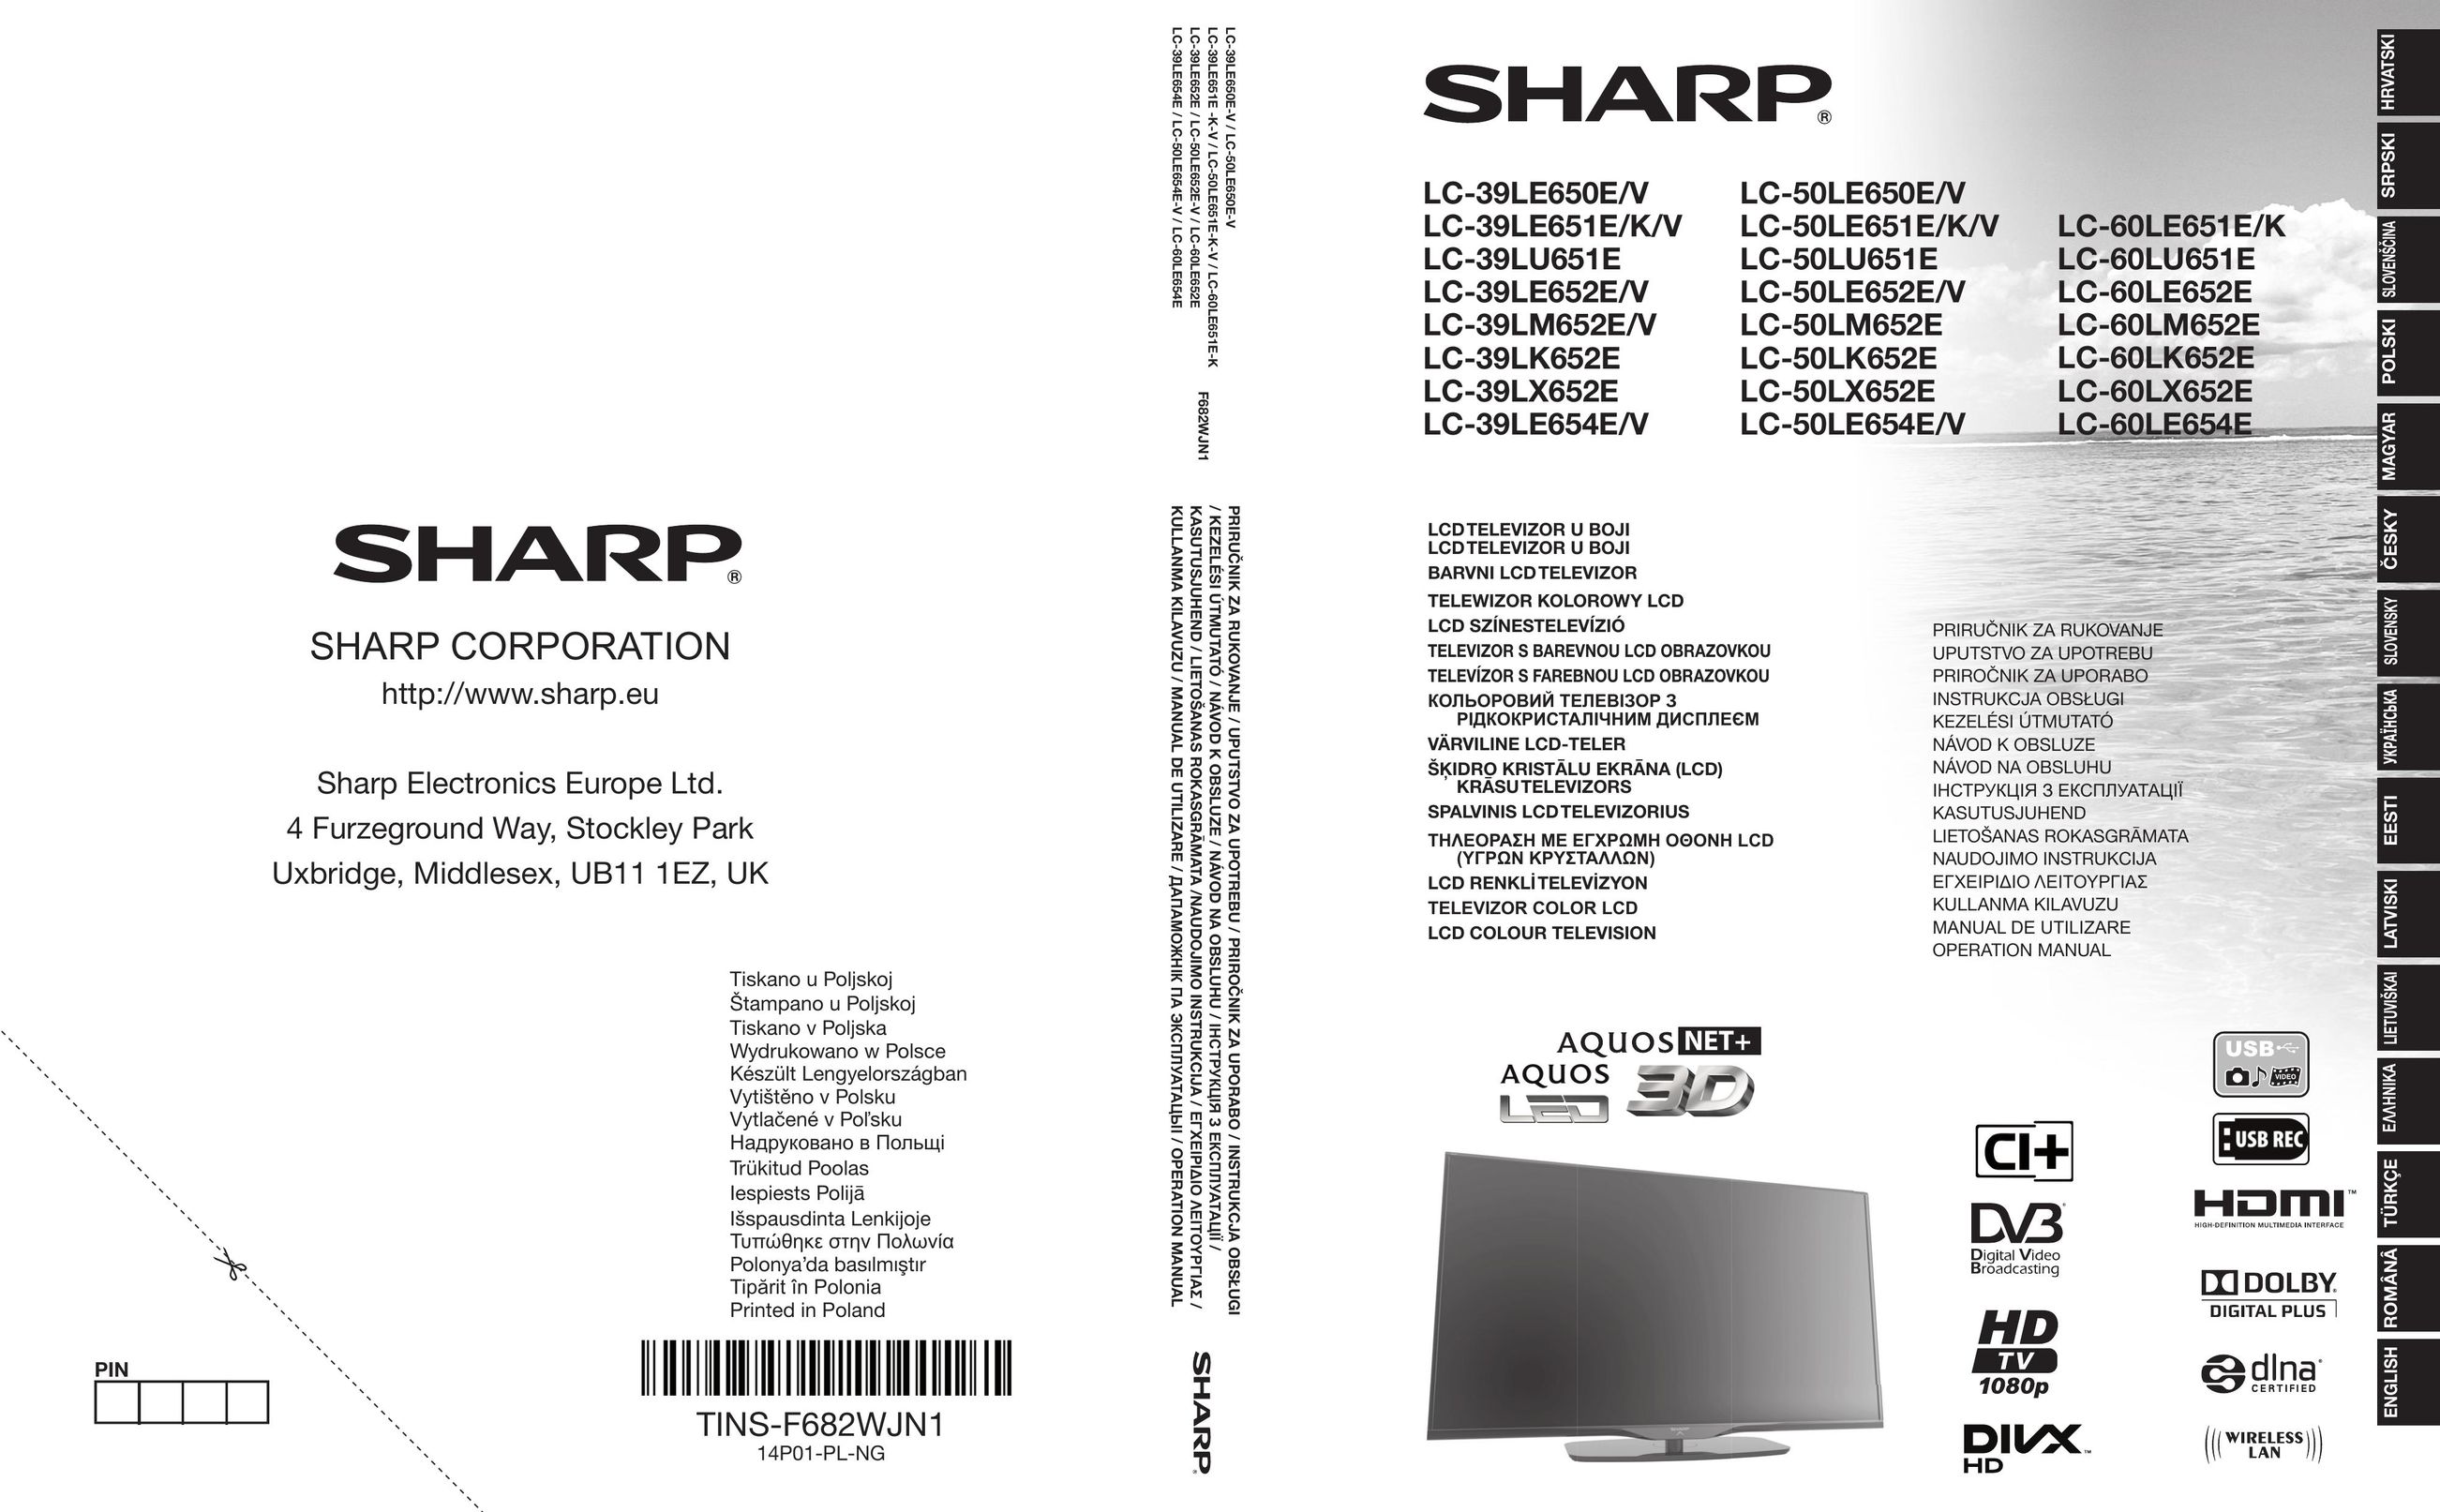 Sharp LC-50LX652E Car Video System User Manual